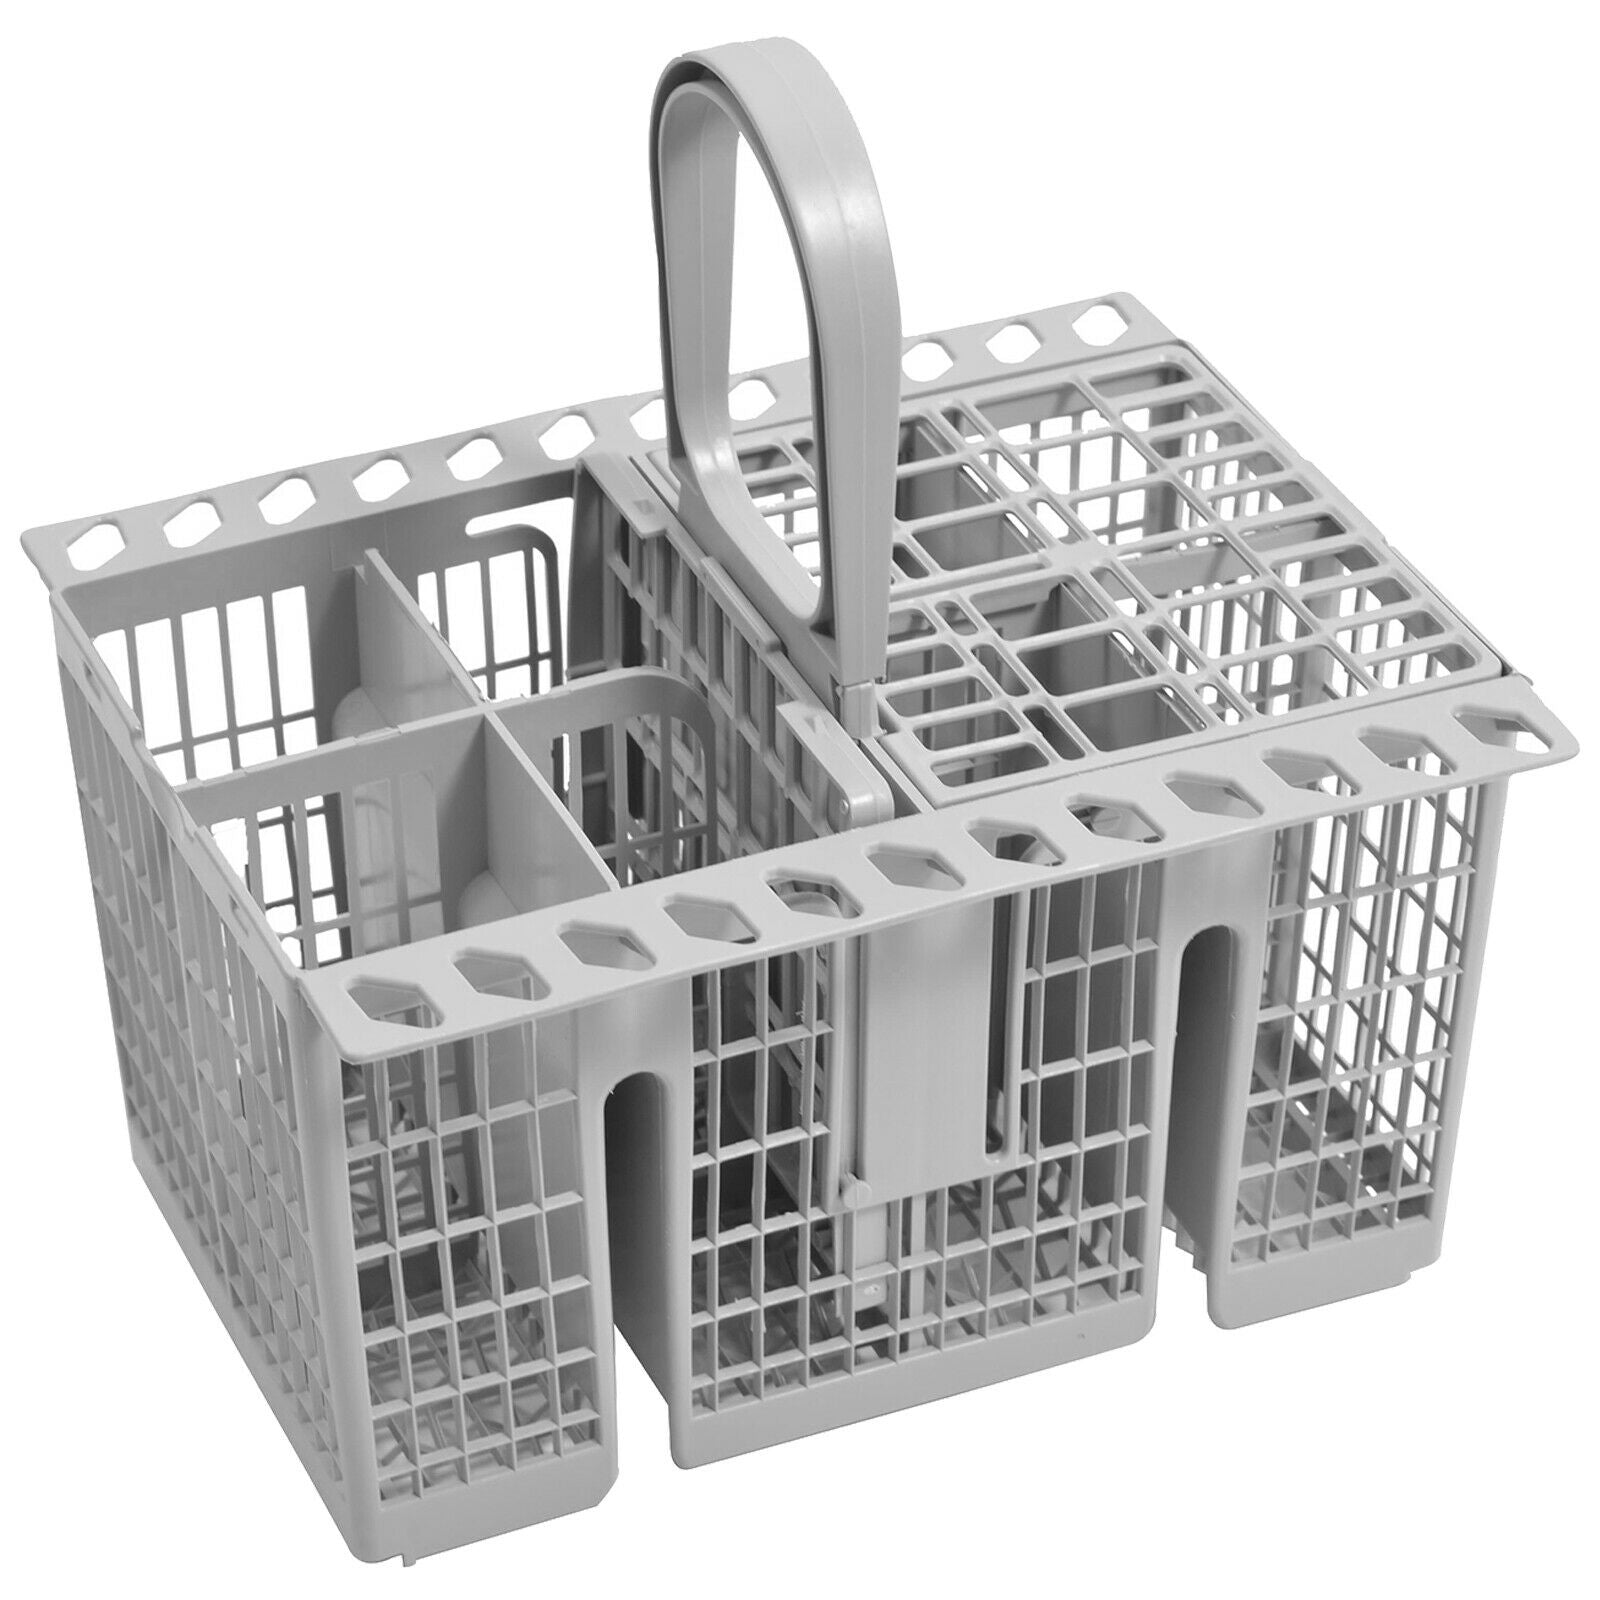 HOTPOINT Dishwasher Cutlery Basket Cage 16 x 21 x 22.5cm + Central Waste Filter